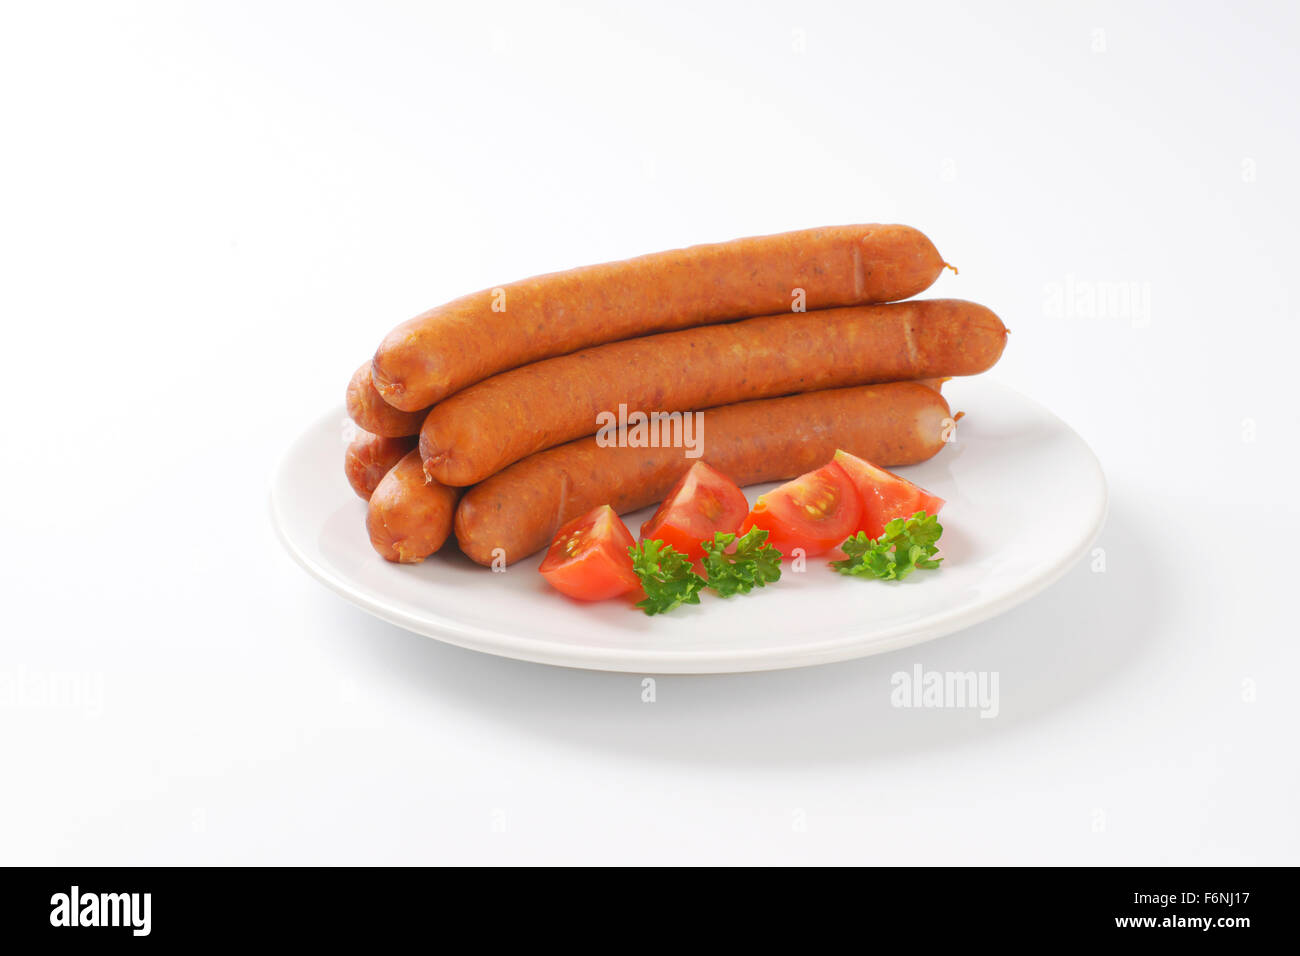 raw frankfurter sausages on white plate Stock Photo